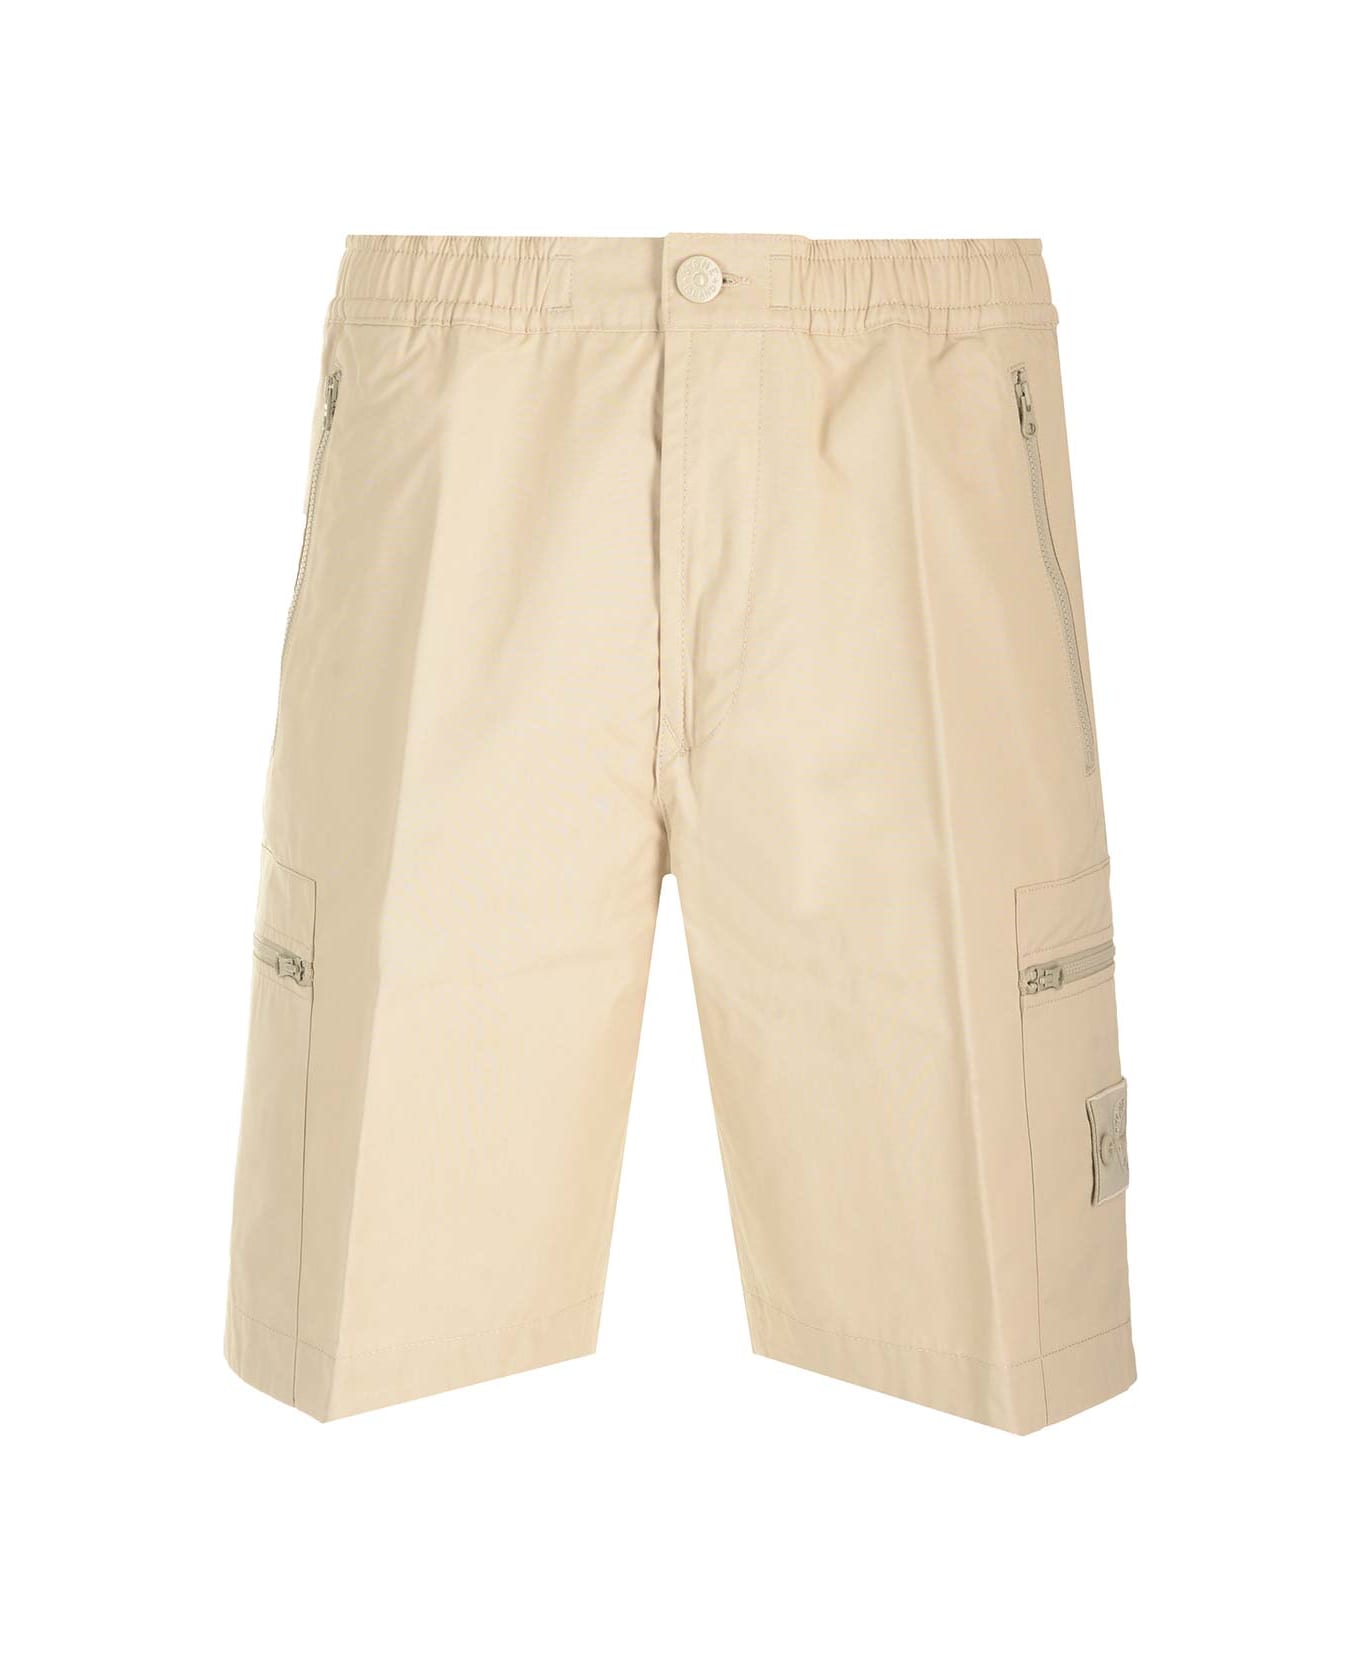 Stone Island Bermuda Cargo Shorts - Nude & Neutrals ショートパンツ